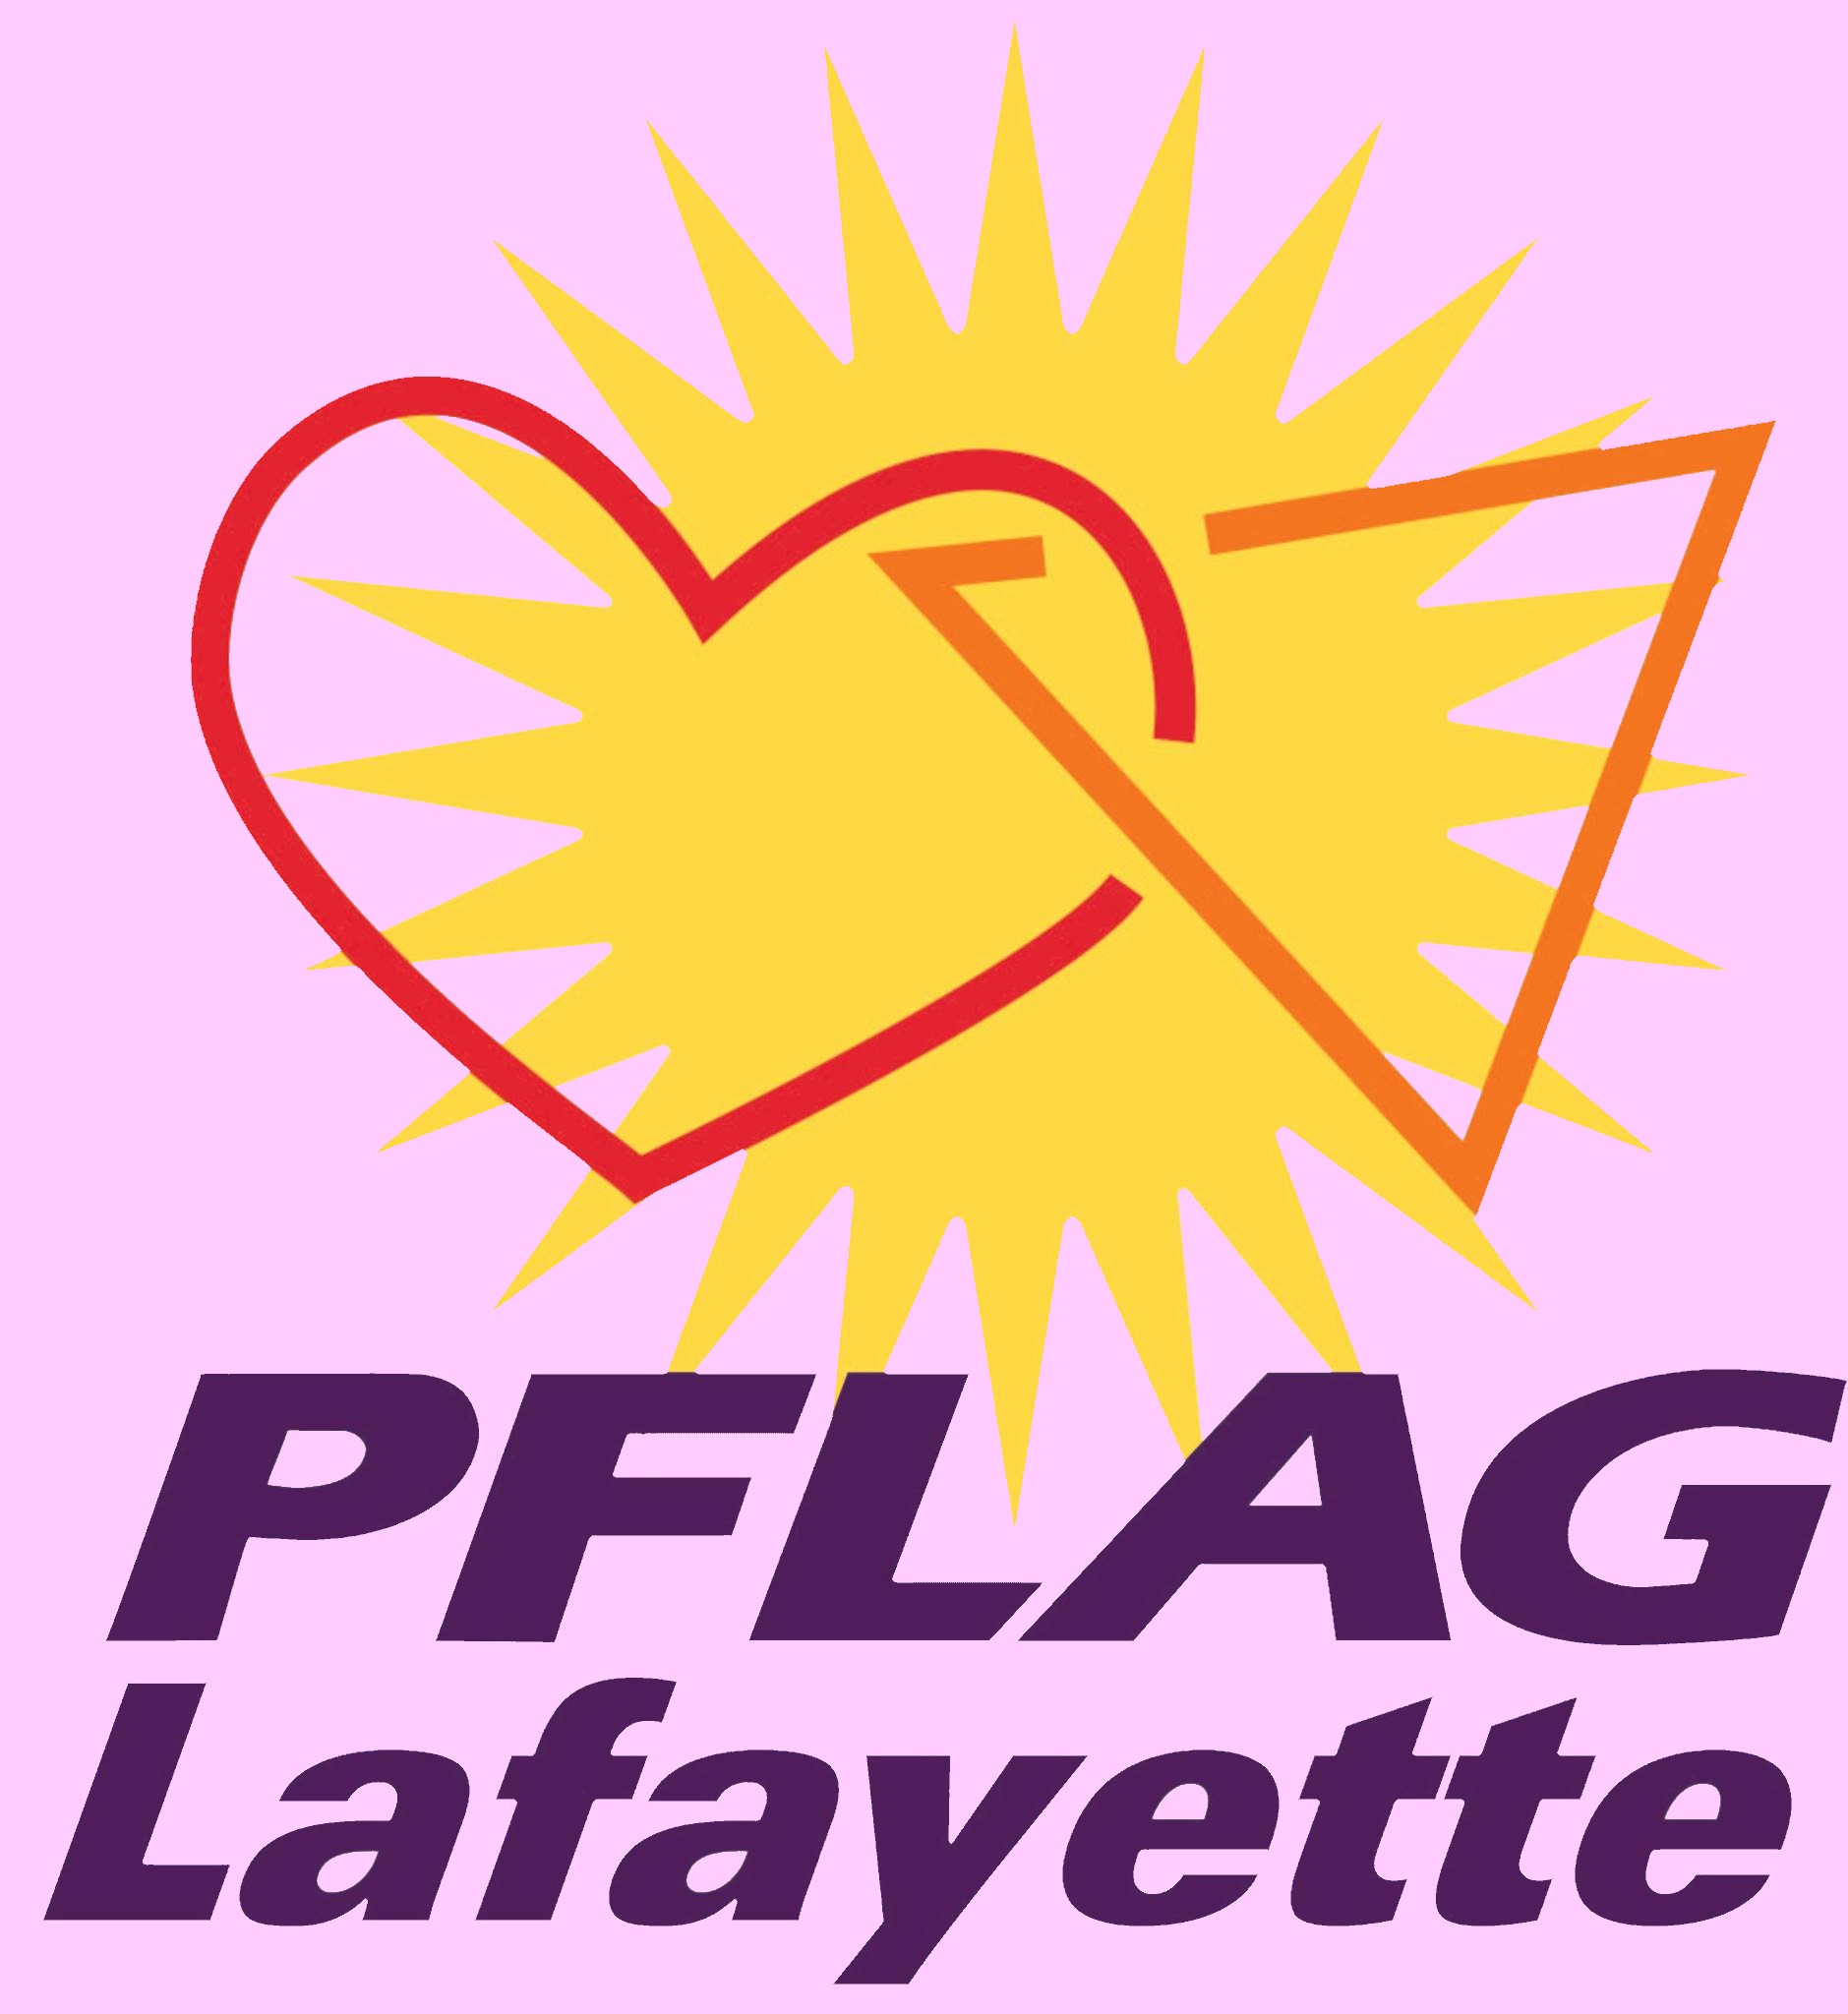 PFLAG Lafayette